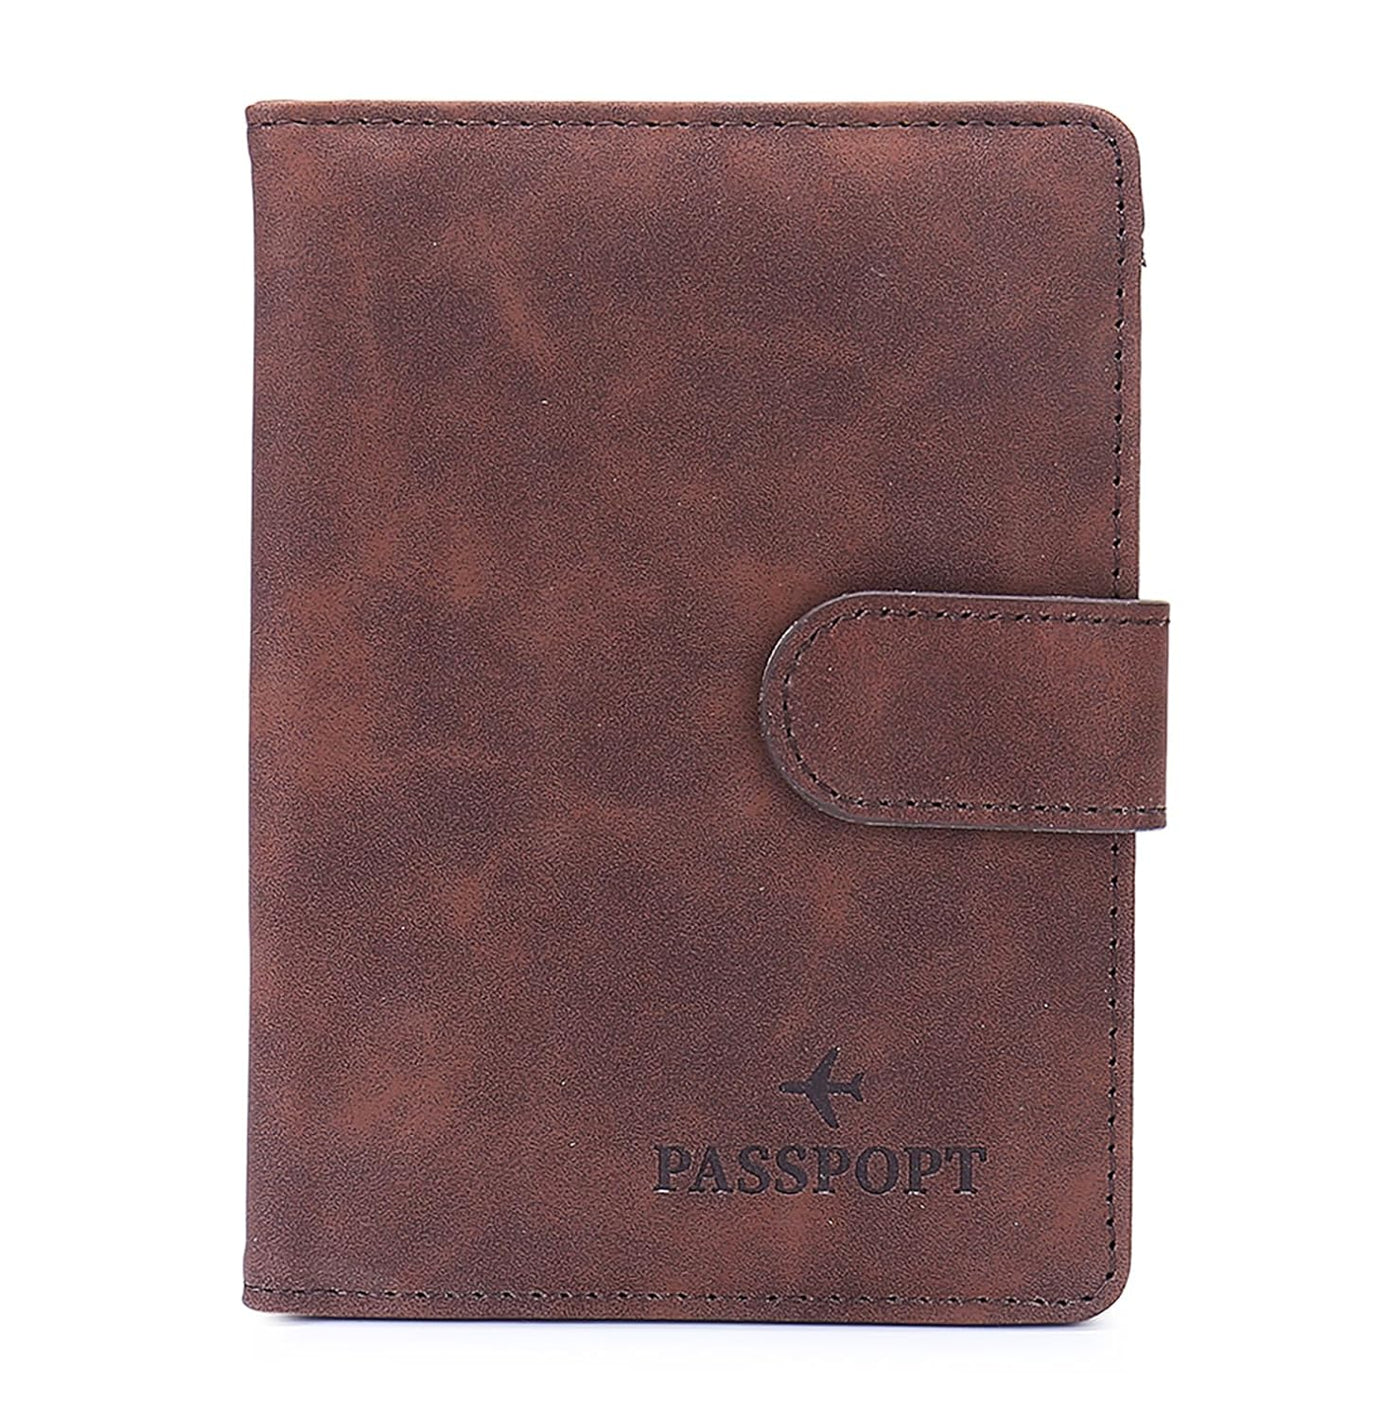 Passport Holder Cover